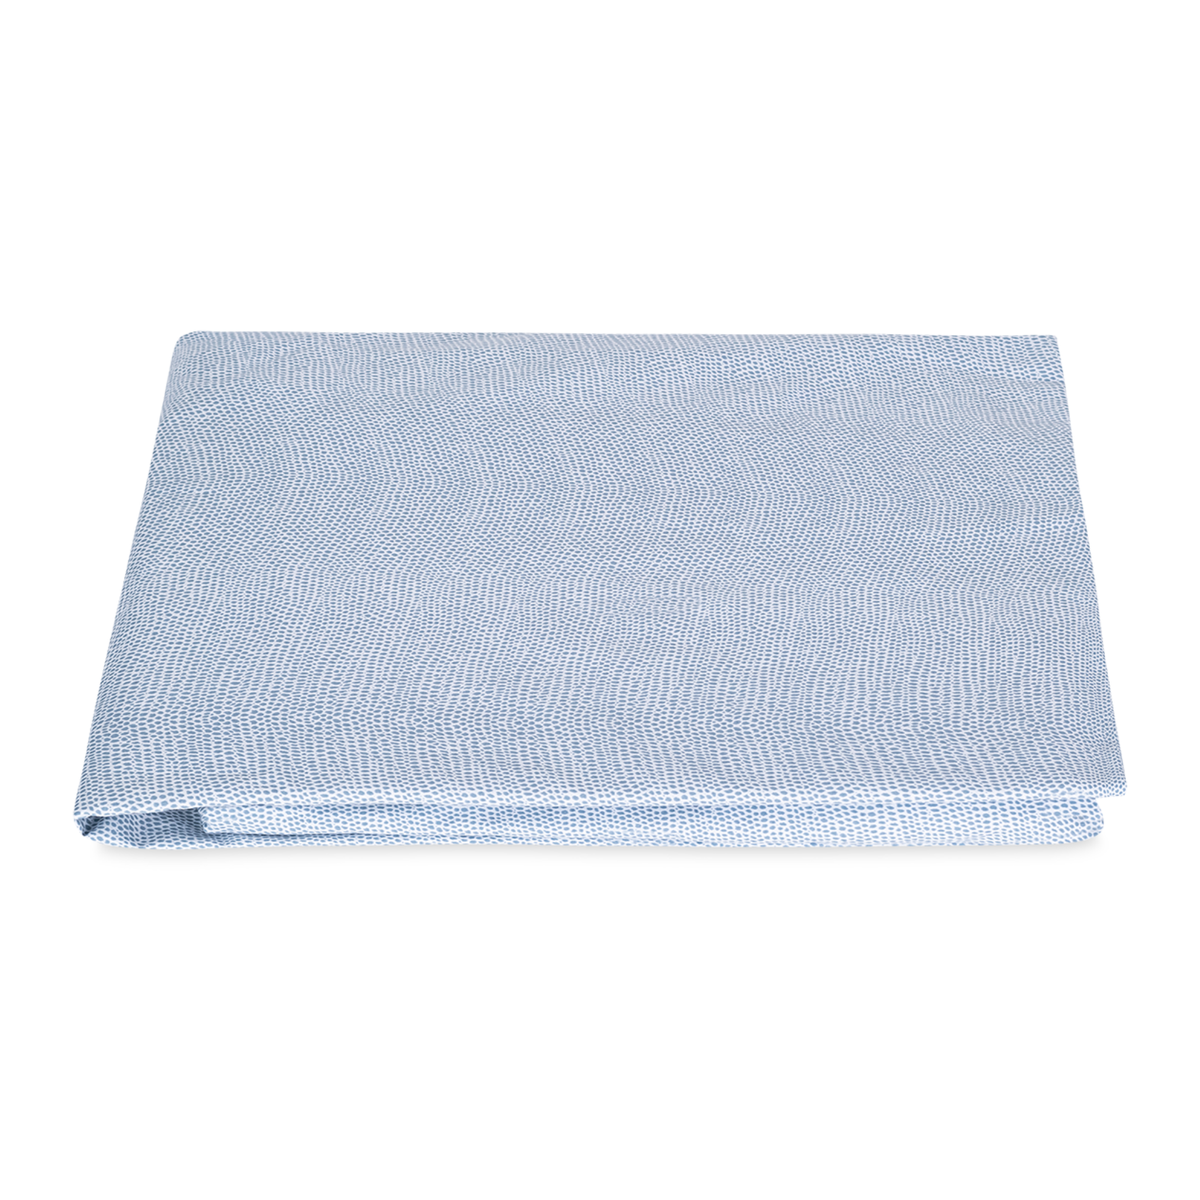 Folded Fitted Sheet of Hazy Blue Matouk Jasper Bedding